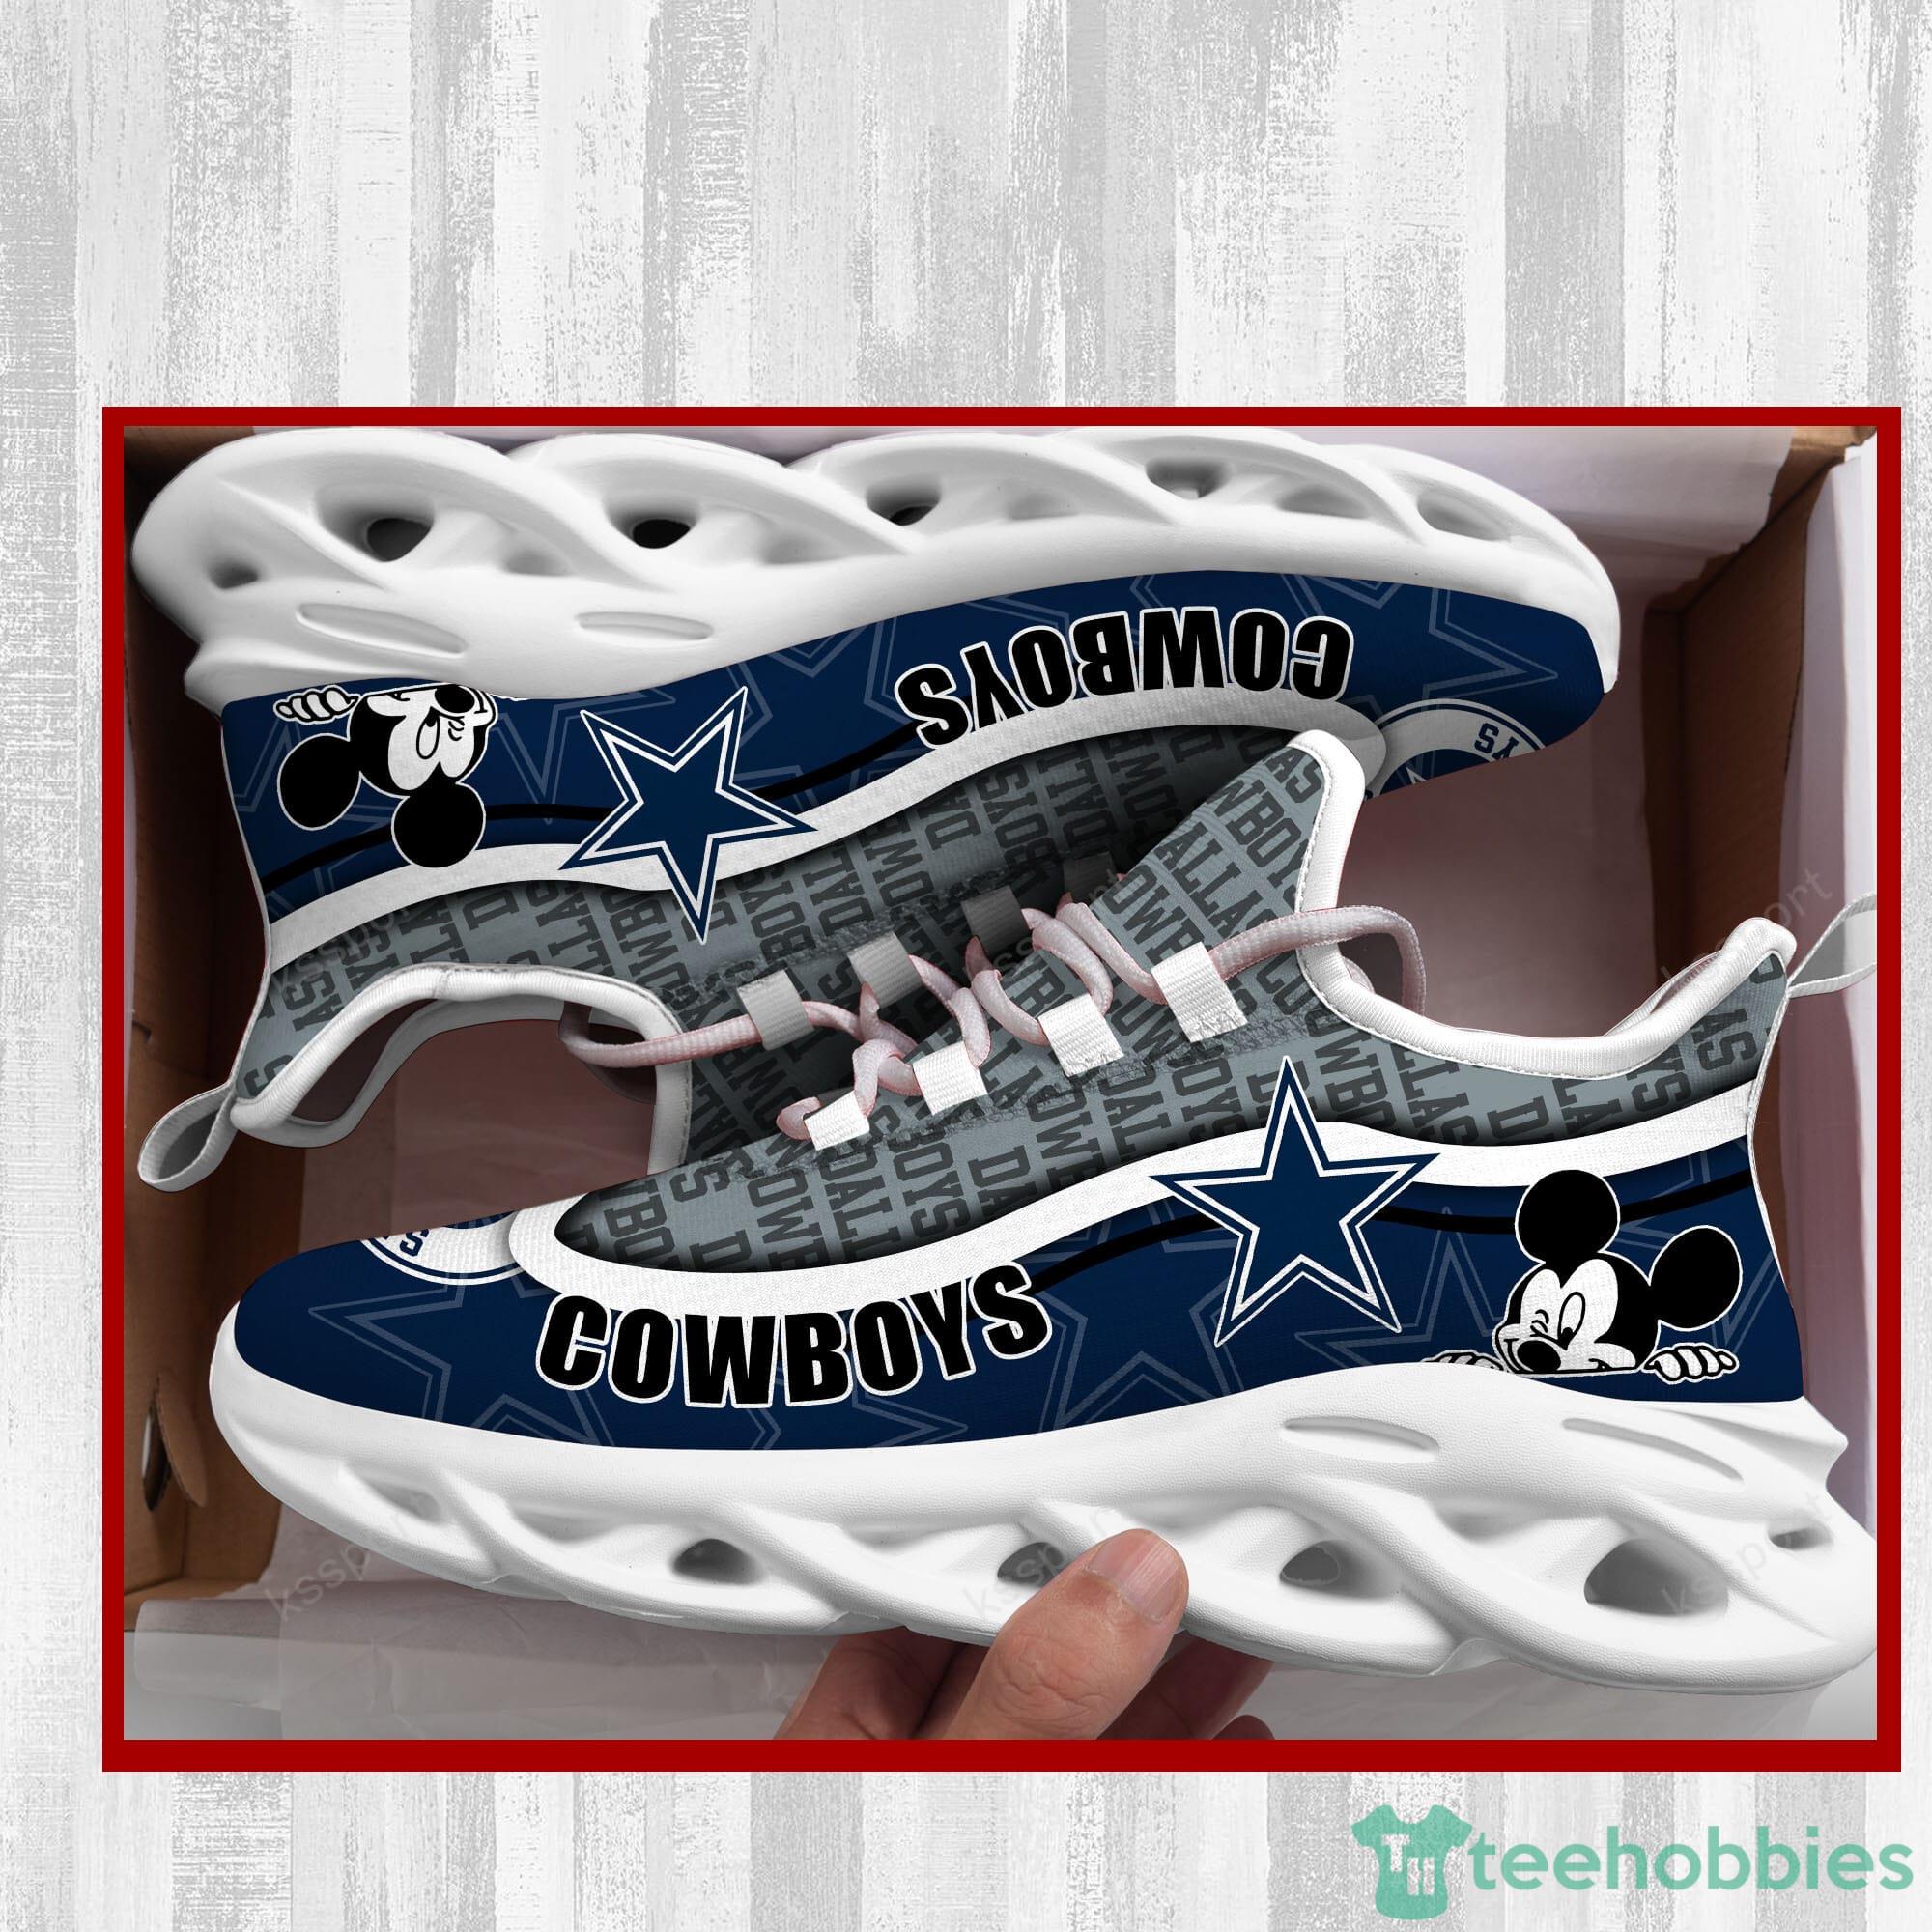 Nfl Dallas Cowboys Team Air Jordan 13 Sneaker Shoes - It's RobinLori...NOW!